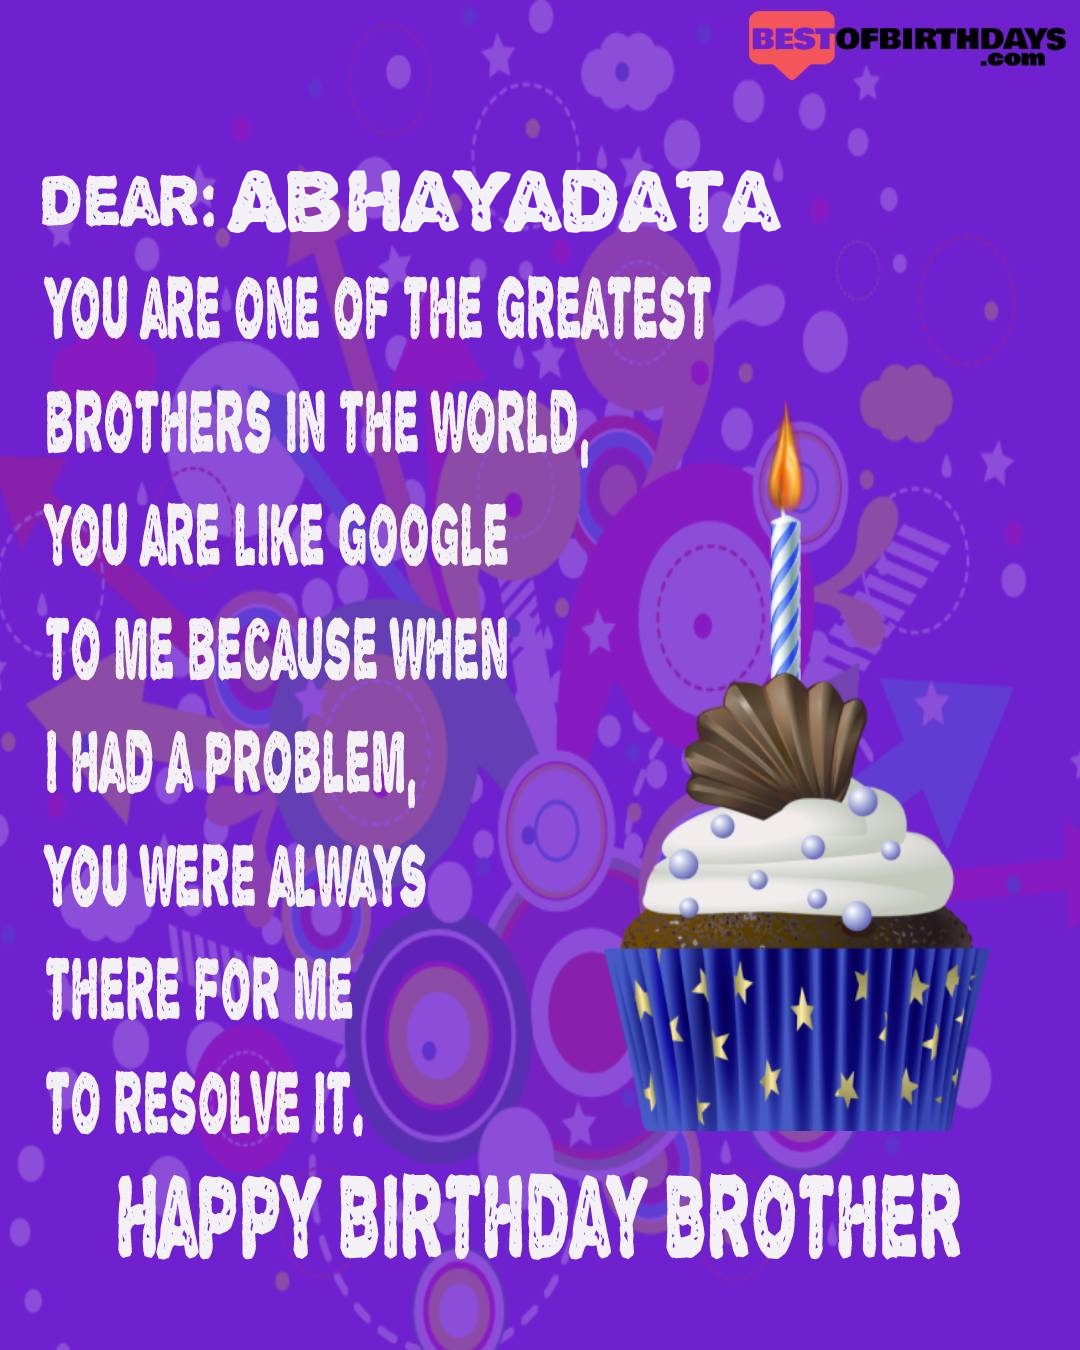 Happy birthday abhayadata bhai brother bro